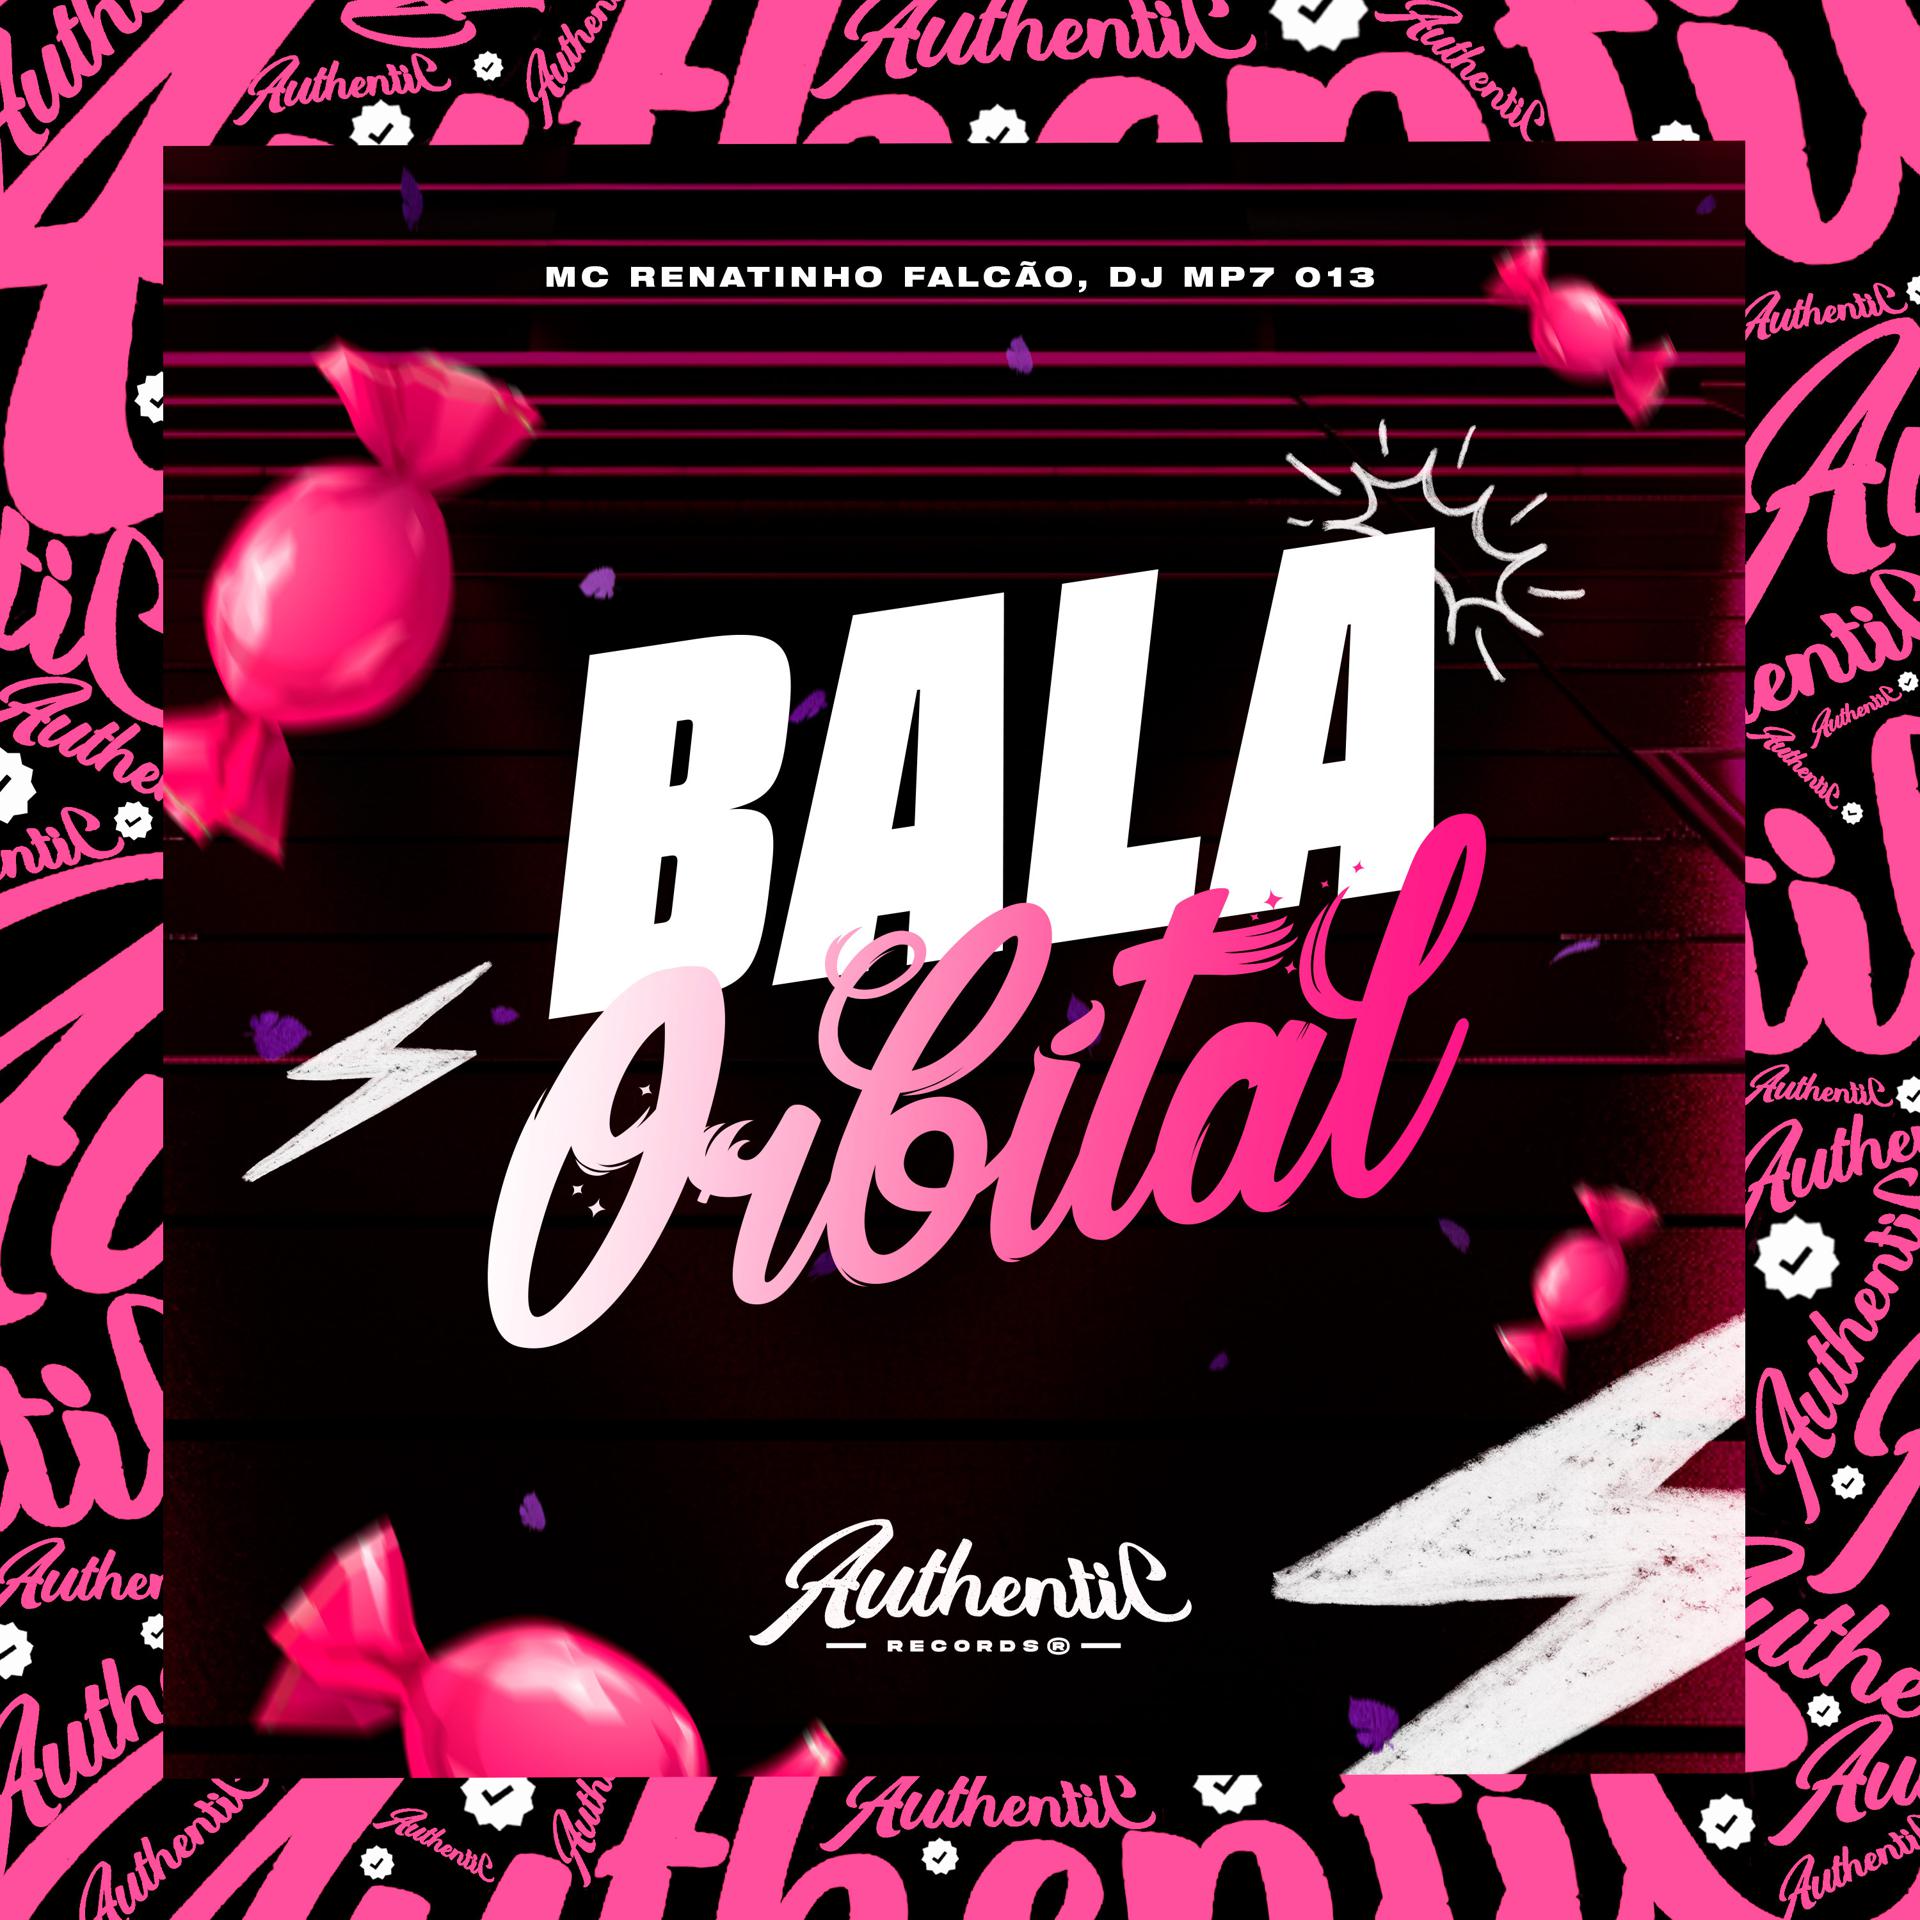 Постер альбома Bala Orbital